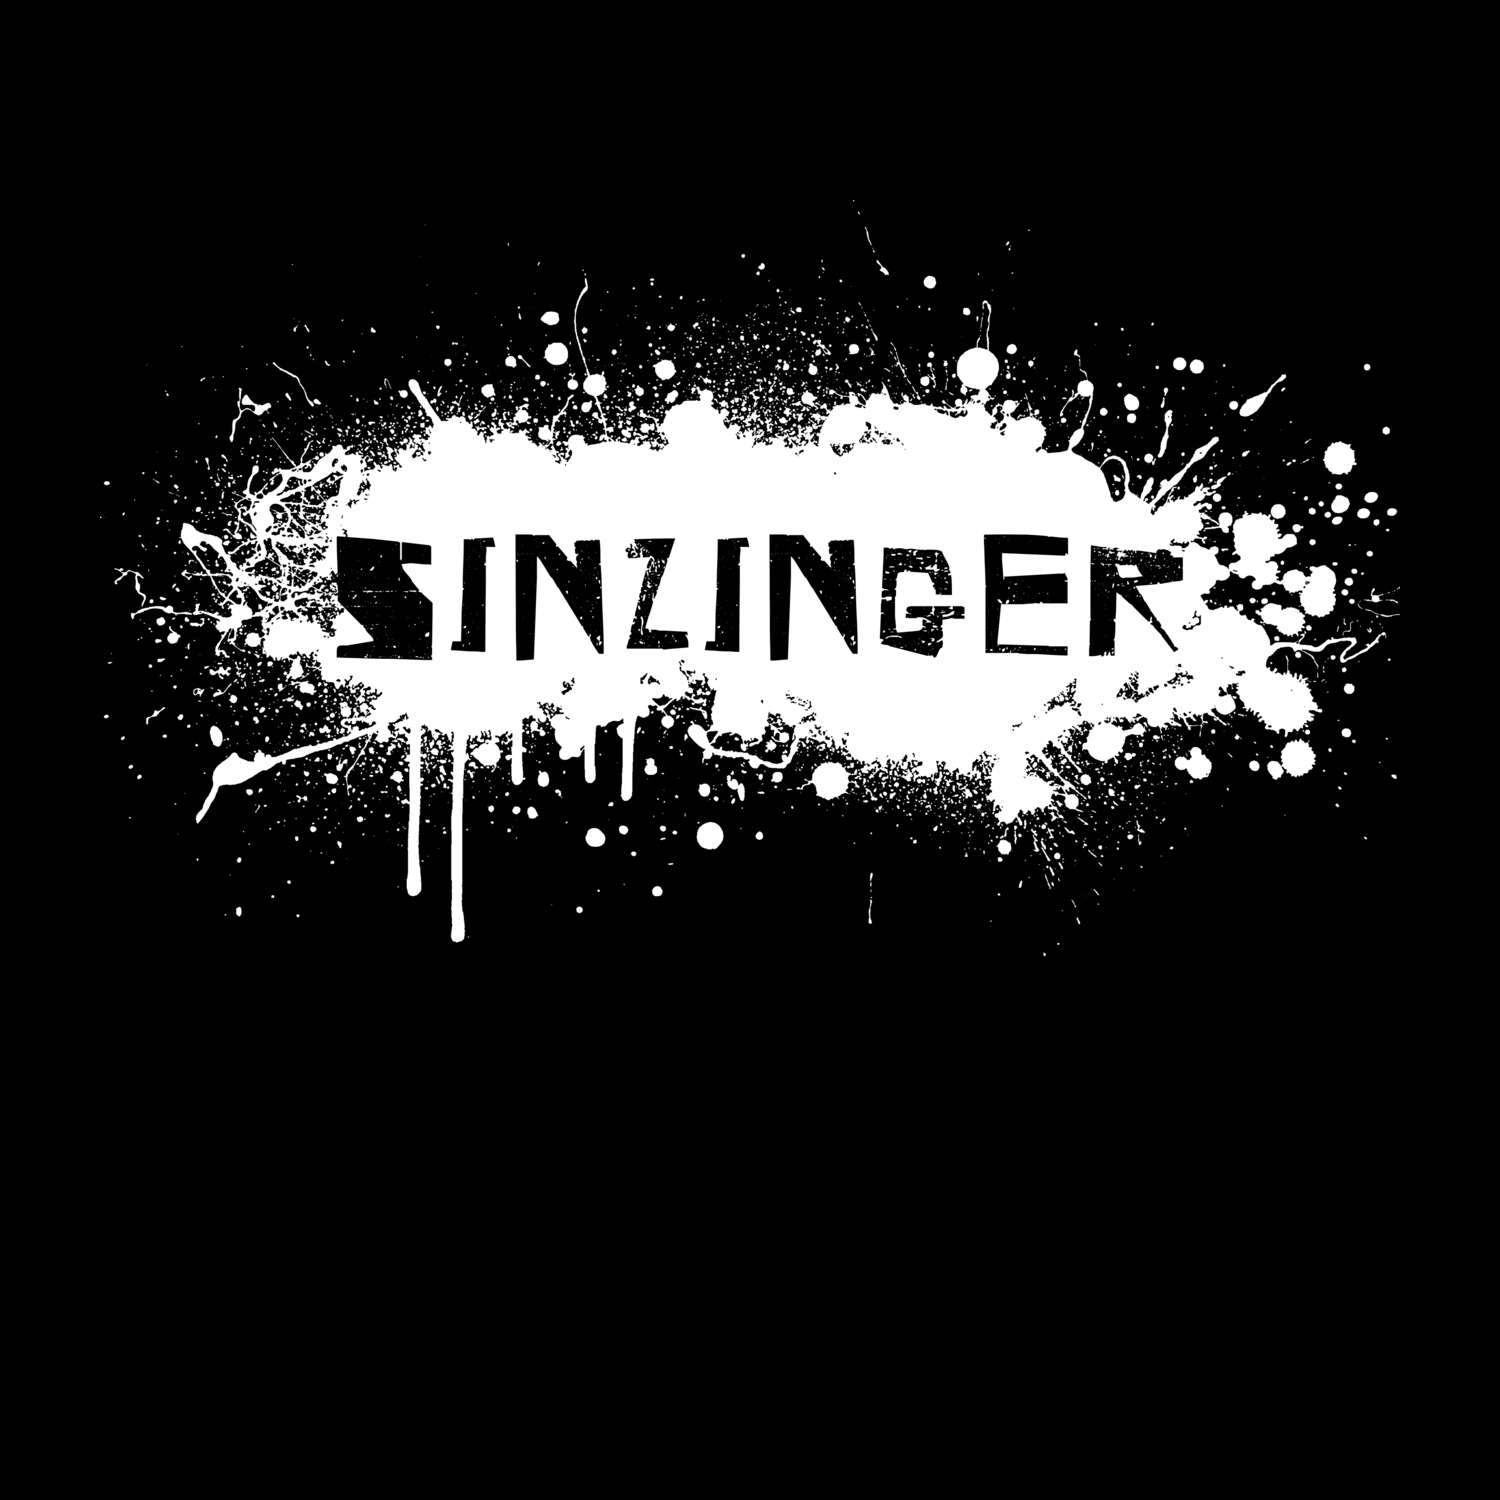 Sinzinger T-Shirt »Paint Splash Punk«